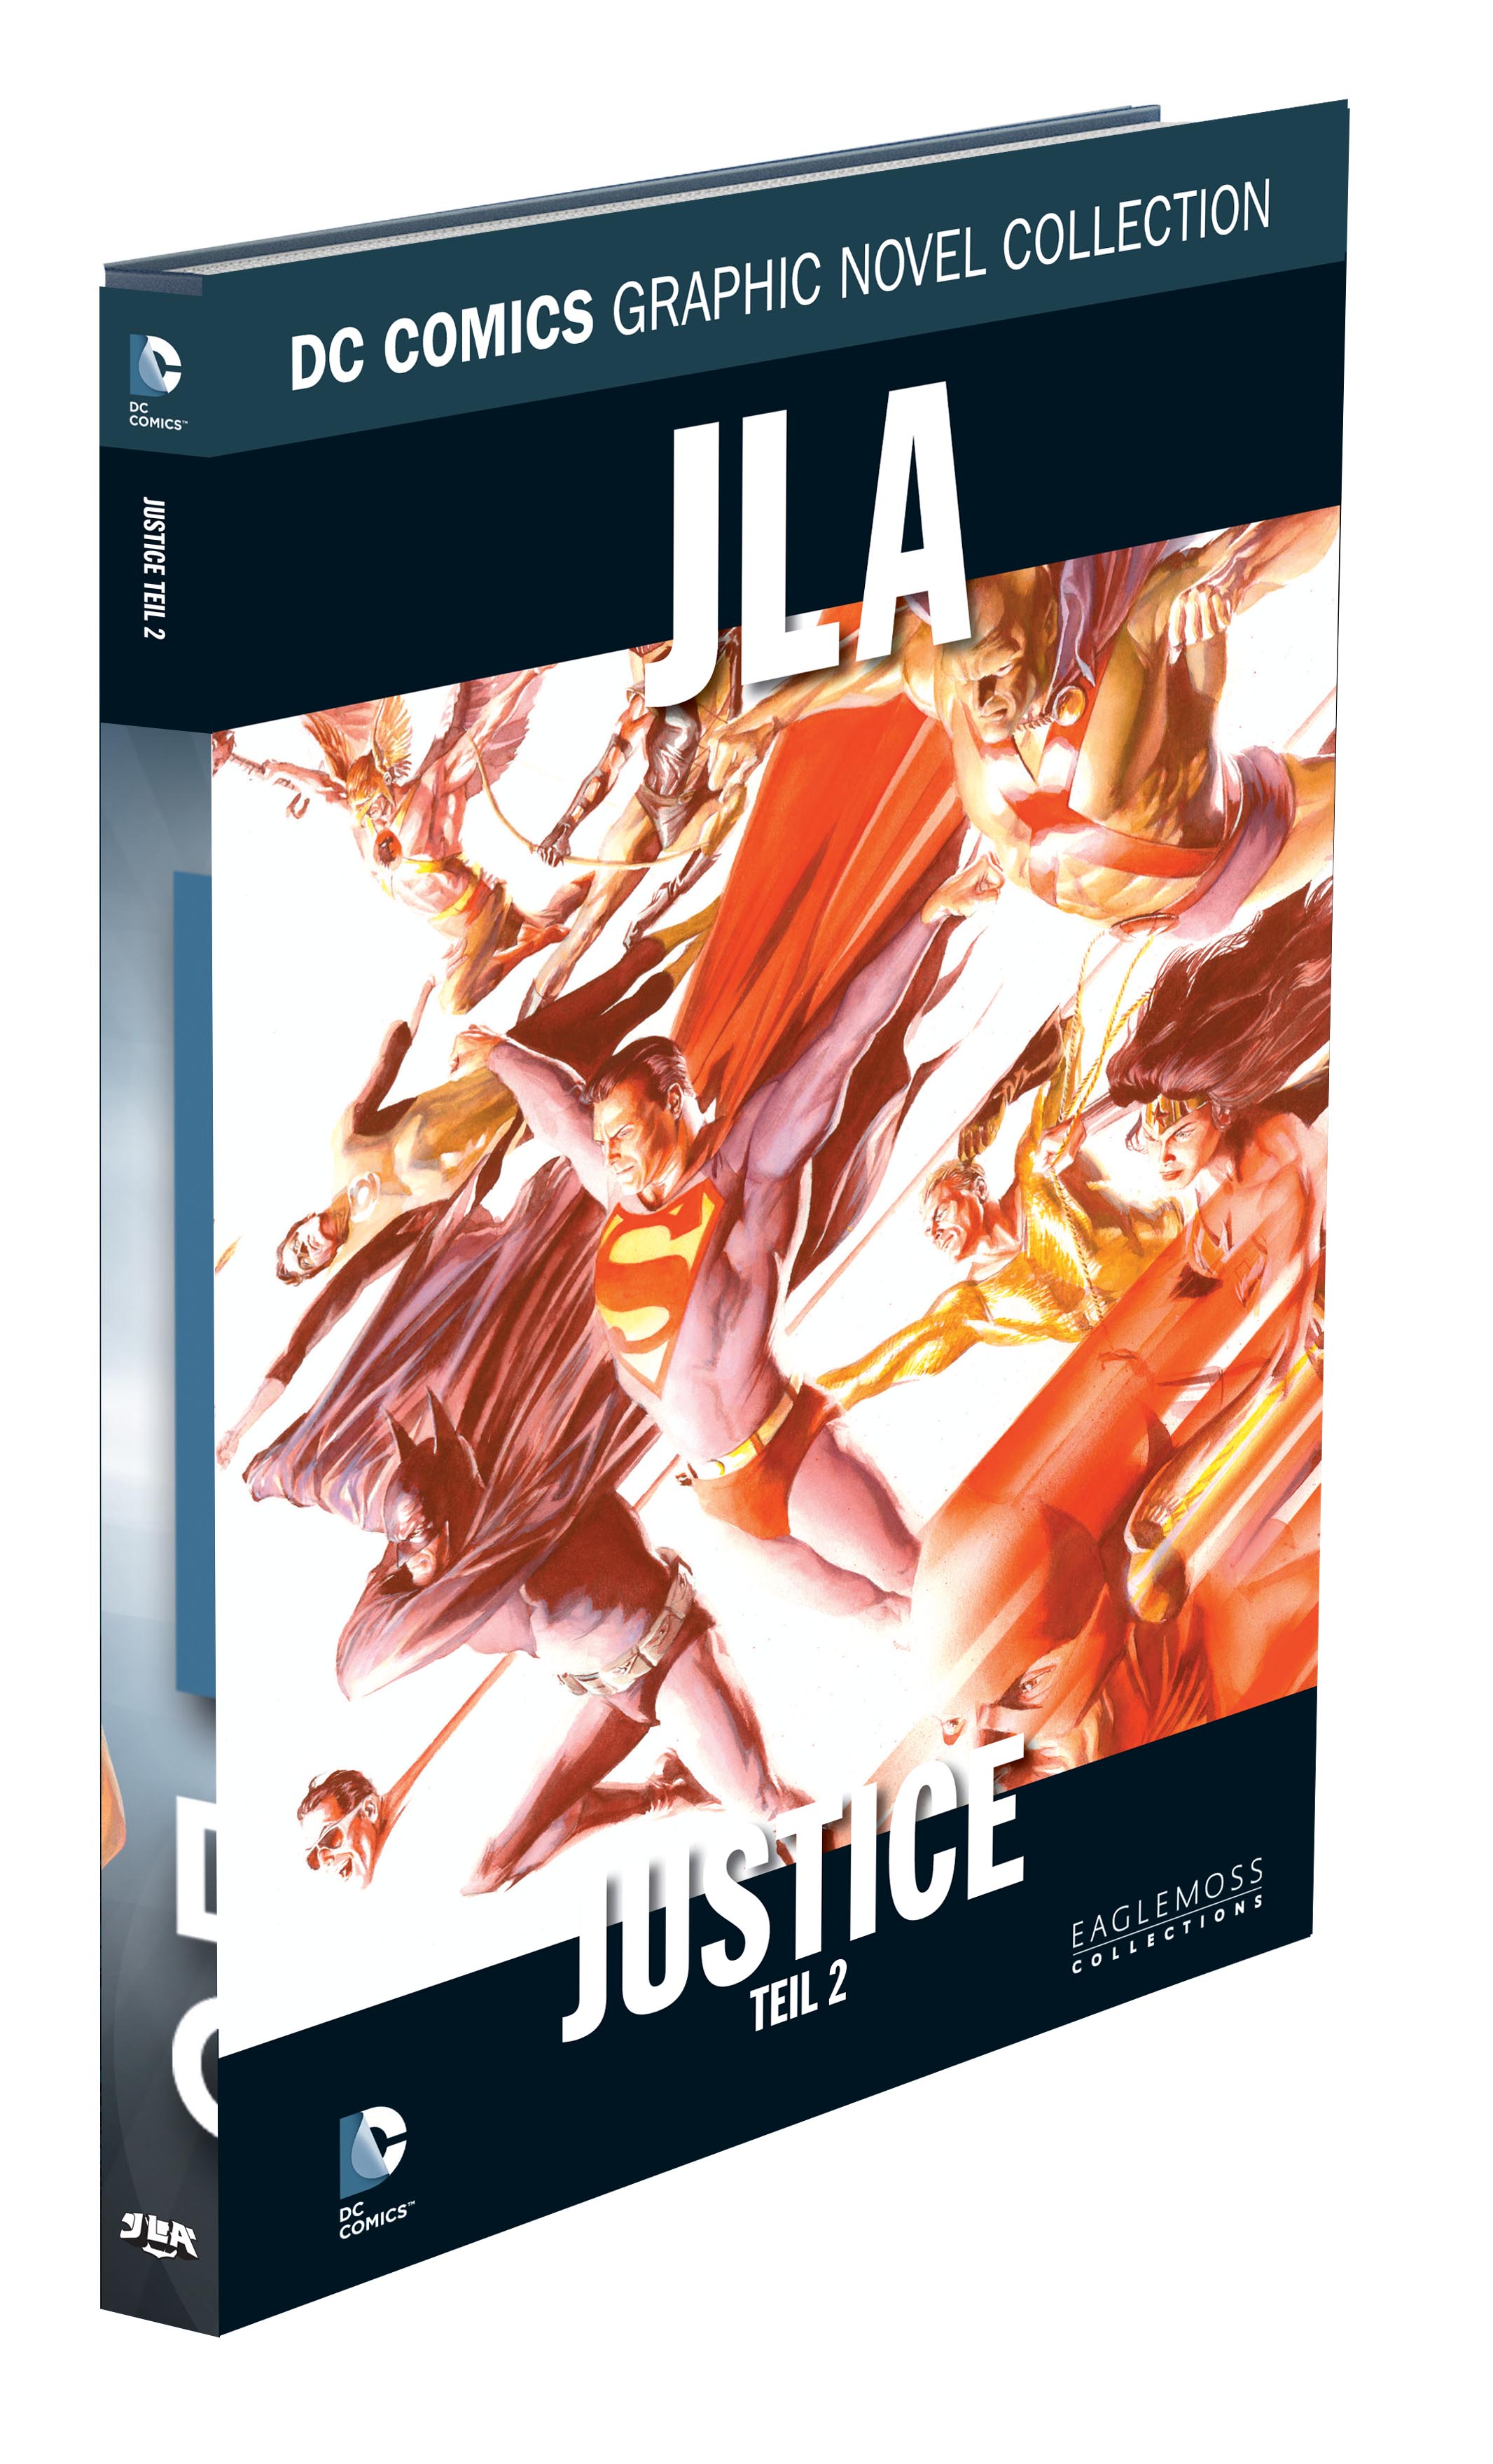 DC Comics Graphic Novel Collection JLA - Justice Teil 2